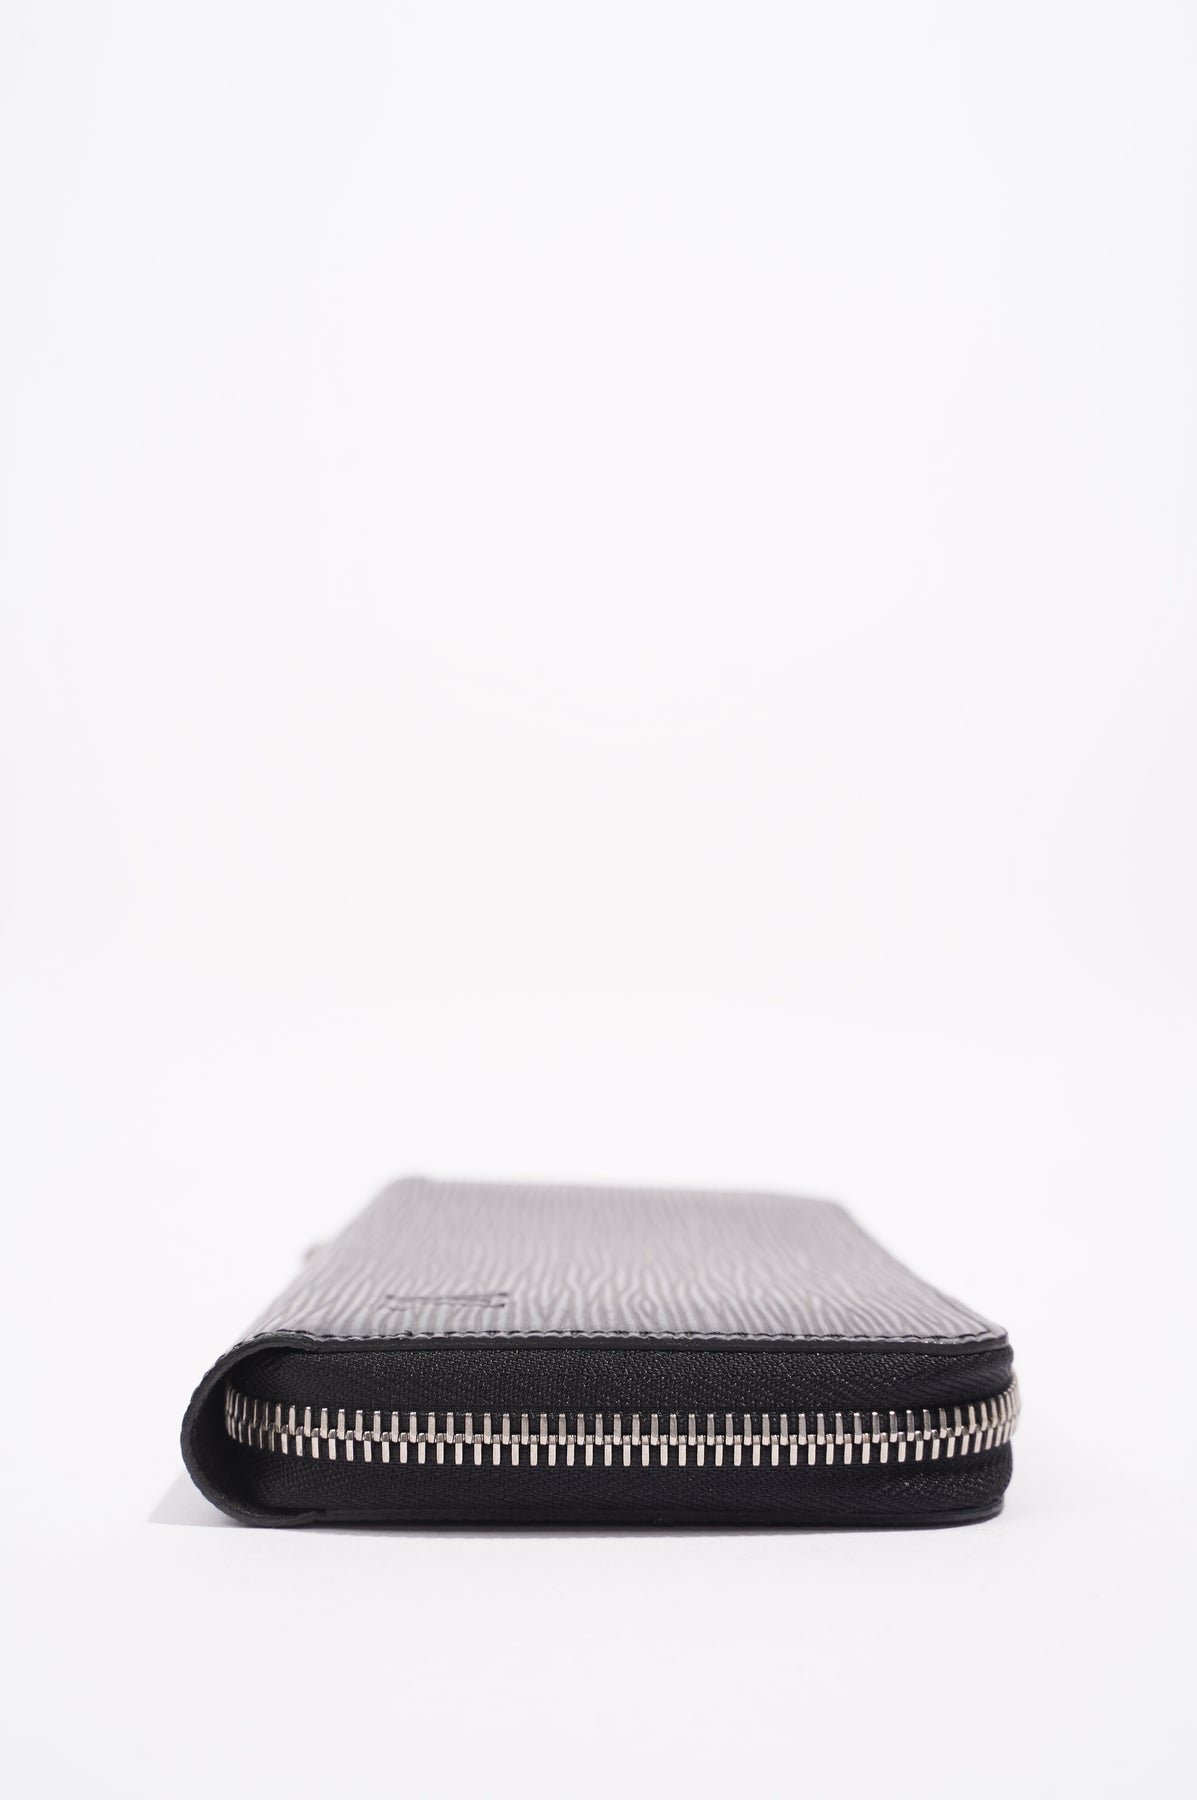 LOUIS VUITTON Black Epi Zippy Wallet M61857 W/Dust Bag and Box